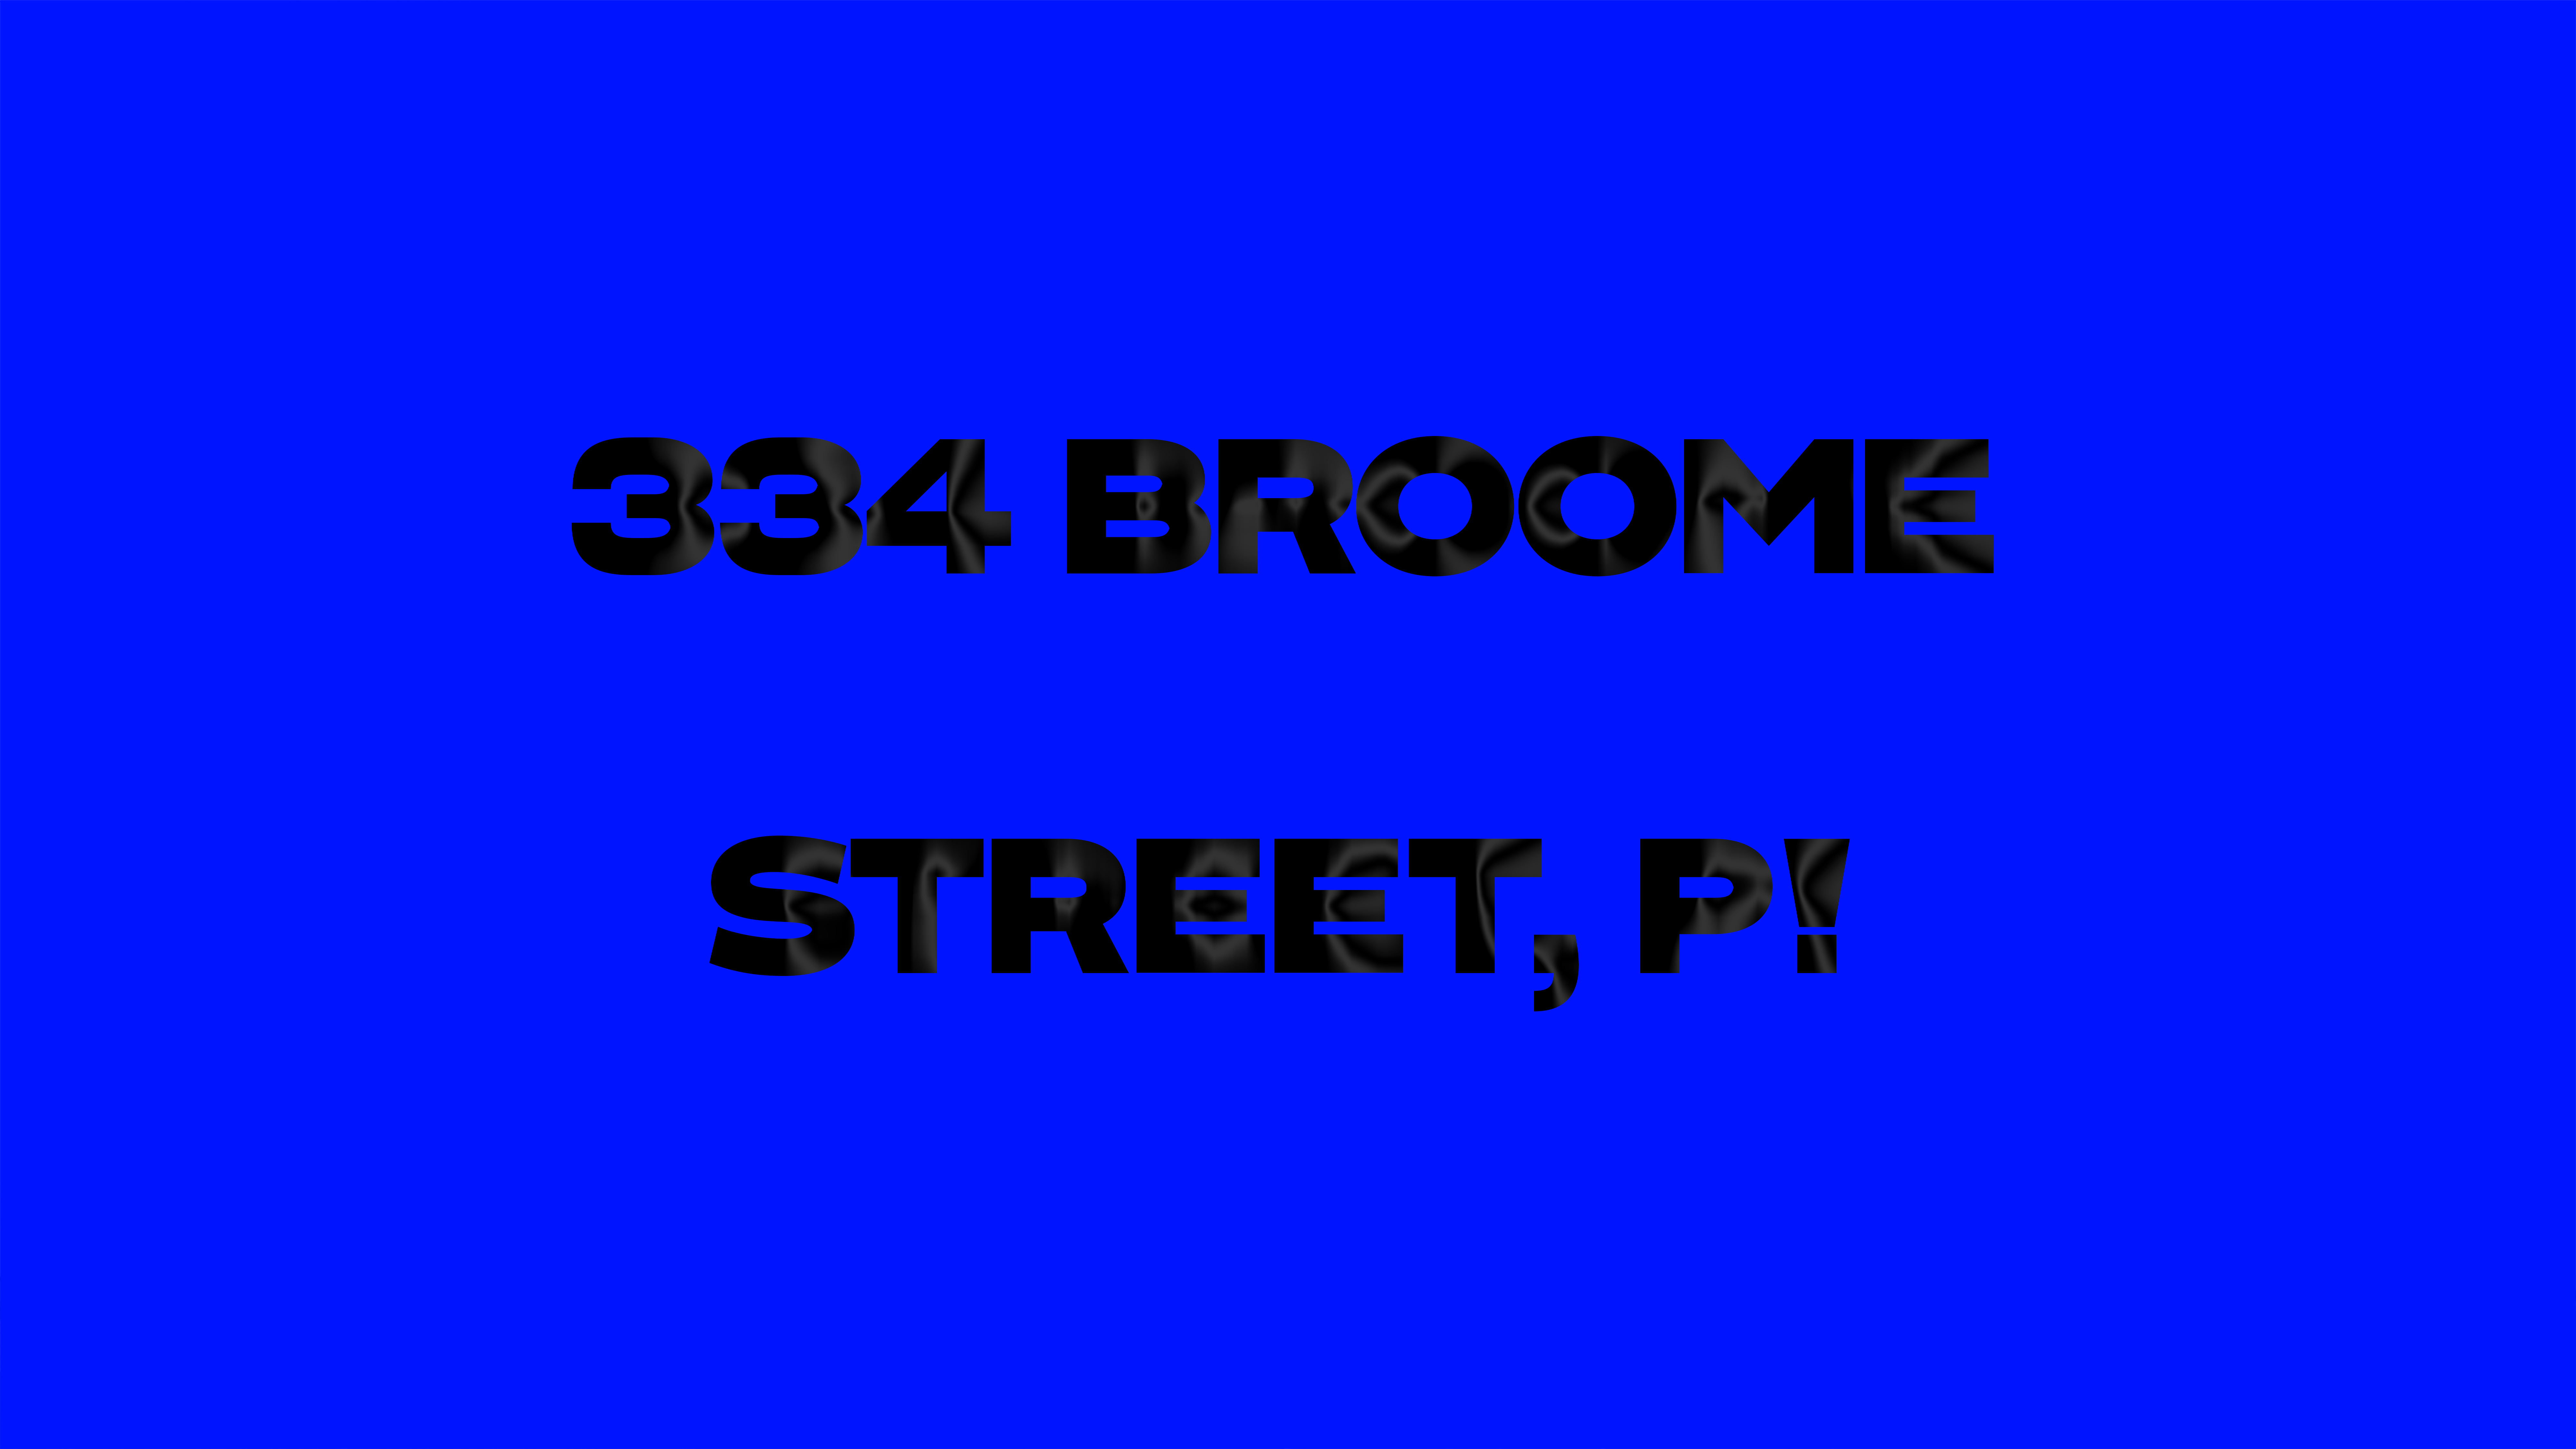 334 broome street, p! black text written on blue background